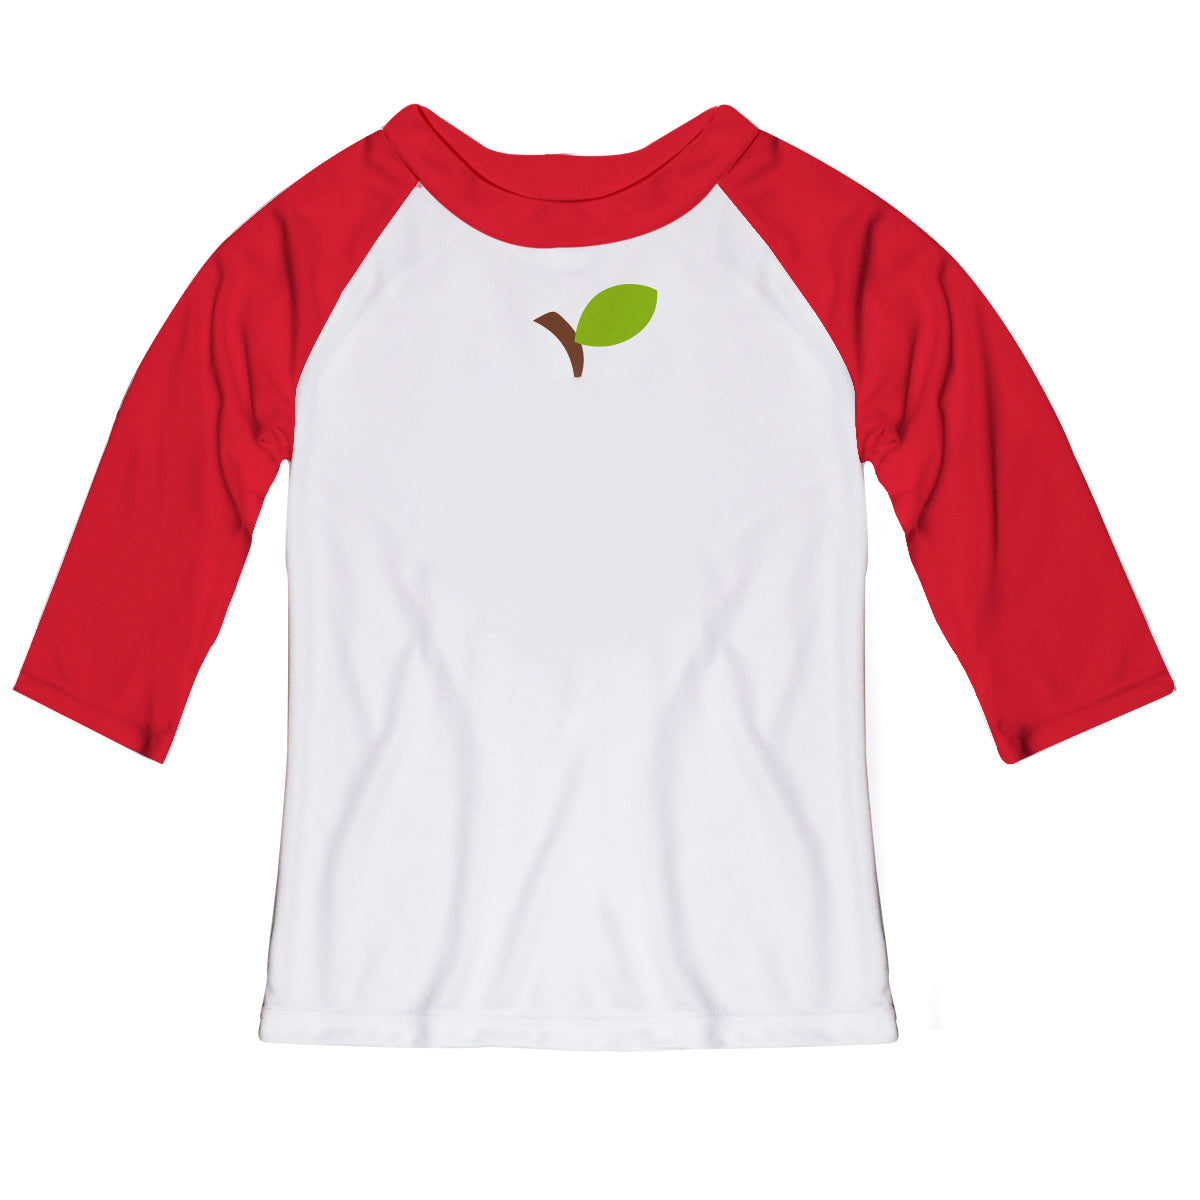 Apple Monogram White And Red Raglan Tee Shirt - Wimziy&Co.